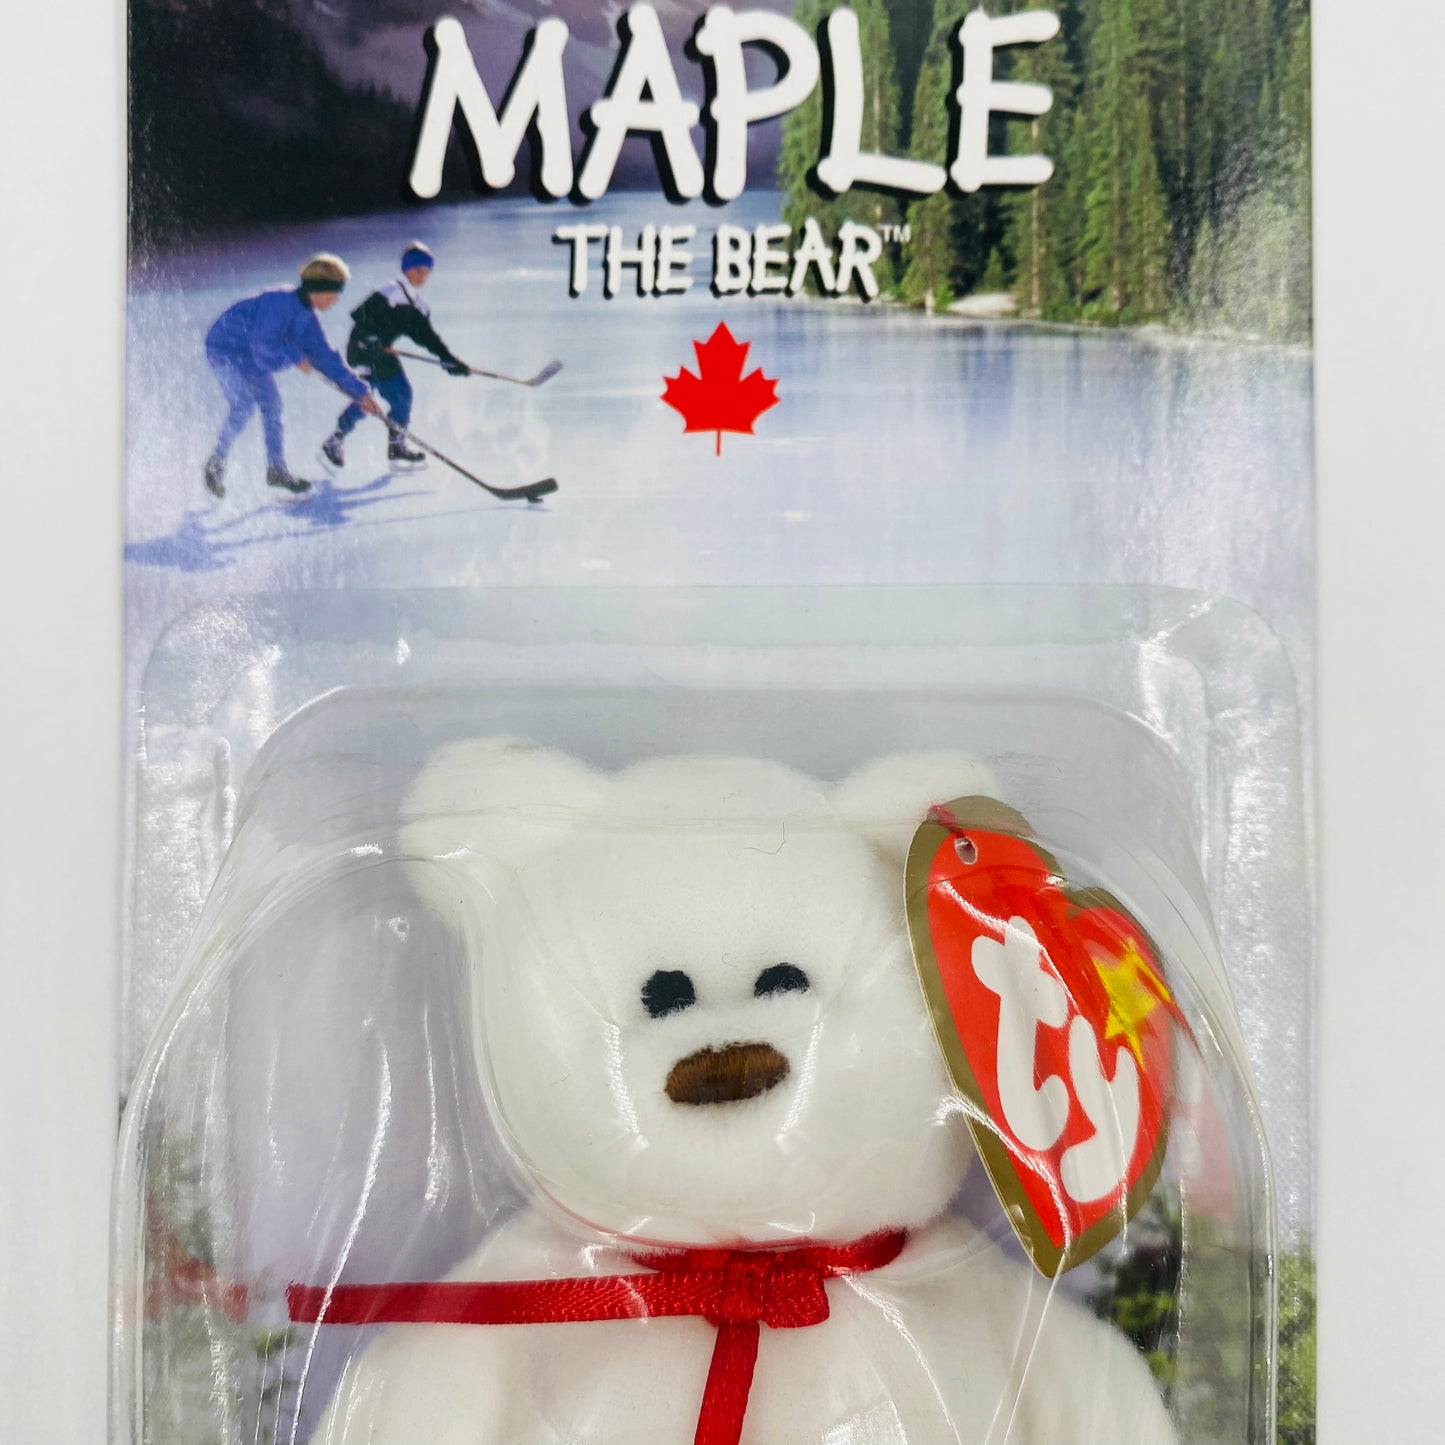 Teenie Beanie Babies International Bears Maple the Canadian Bear McDonald's Happy Meal bean bag plush toy animal (1999) carded